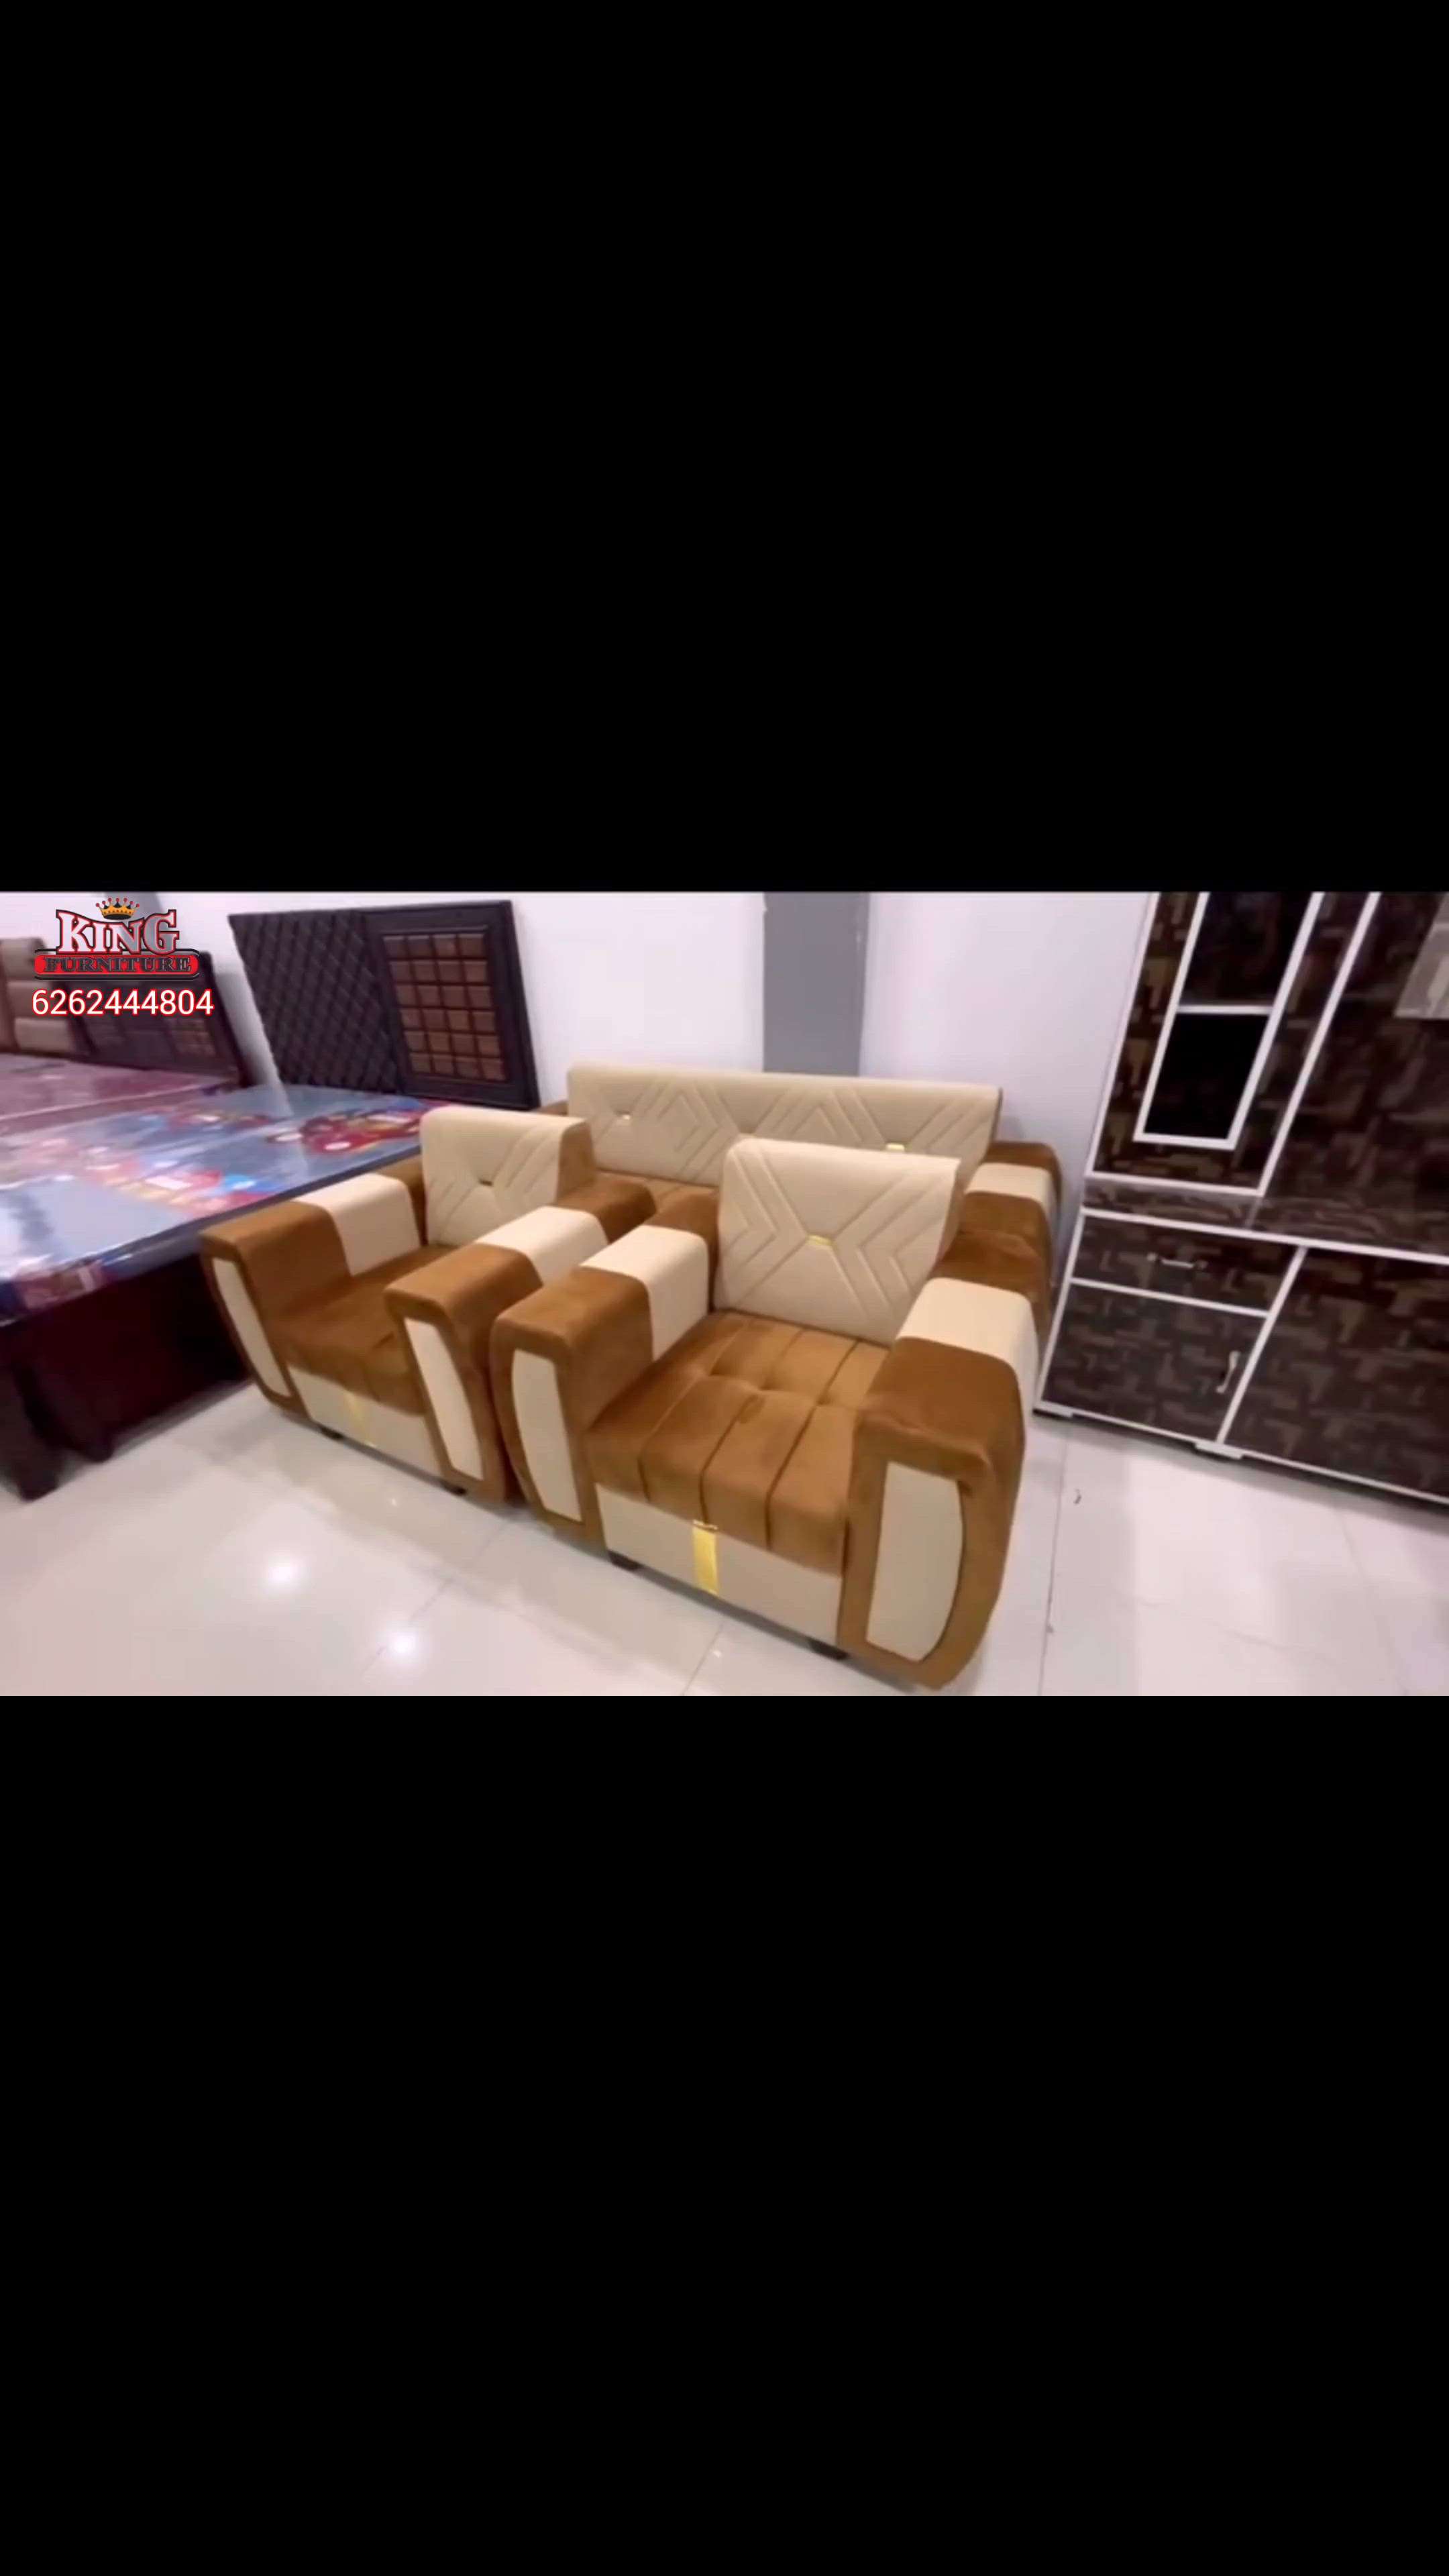 3+1+1 sofa set 5 seeter sofa new design sofa furniture #sofa #furniture #interior #indore #viralreels  #koloapp #koloviral #koloindia #furnituremaker